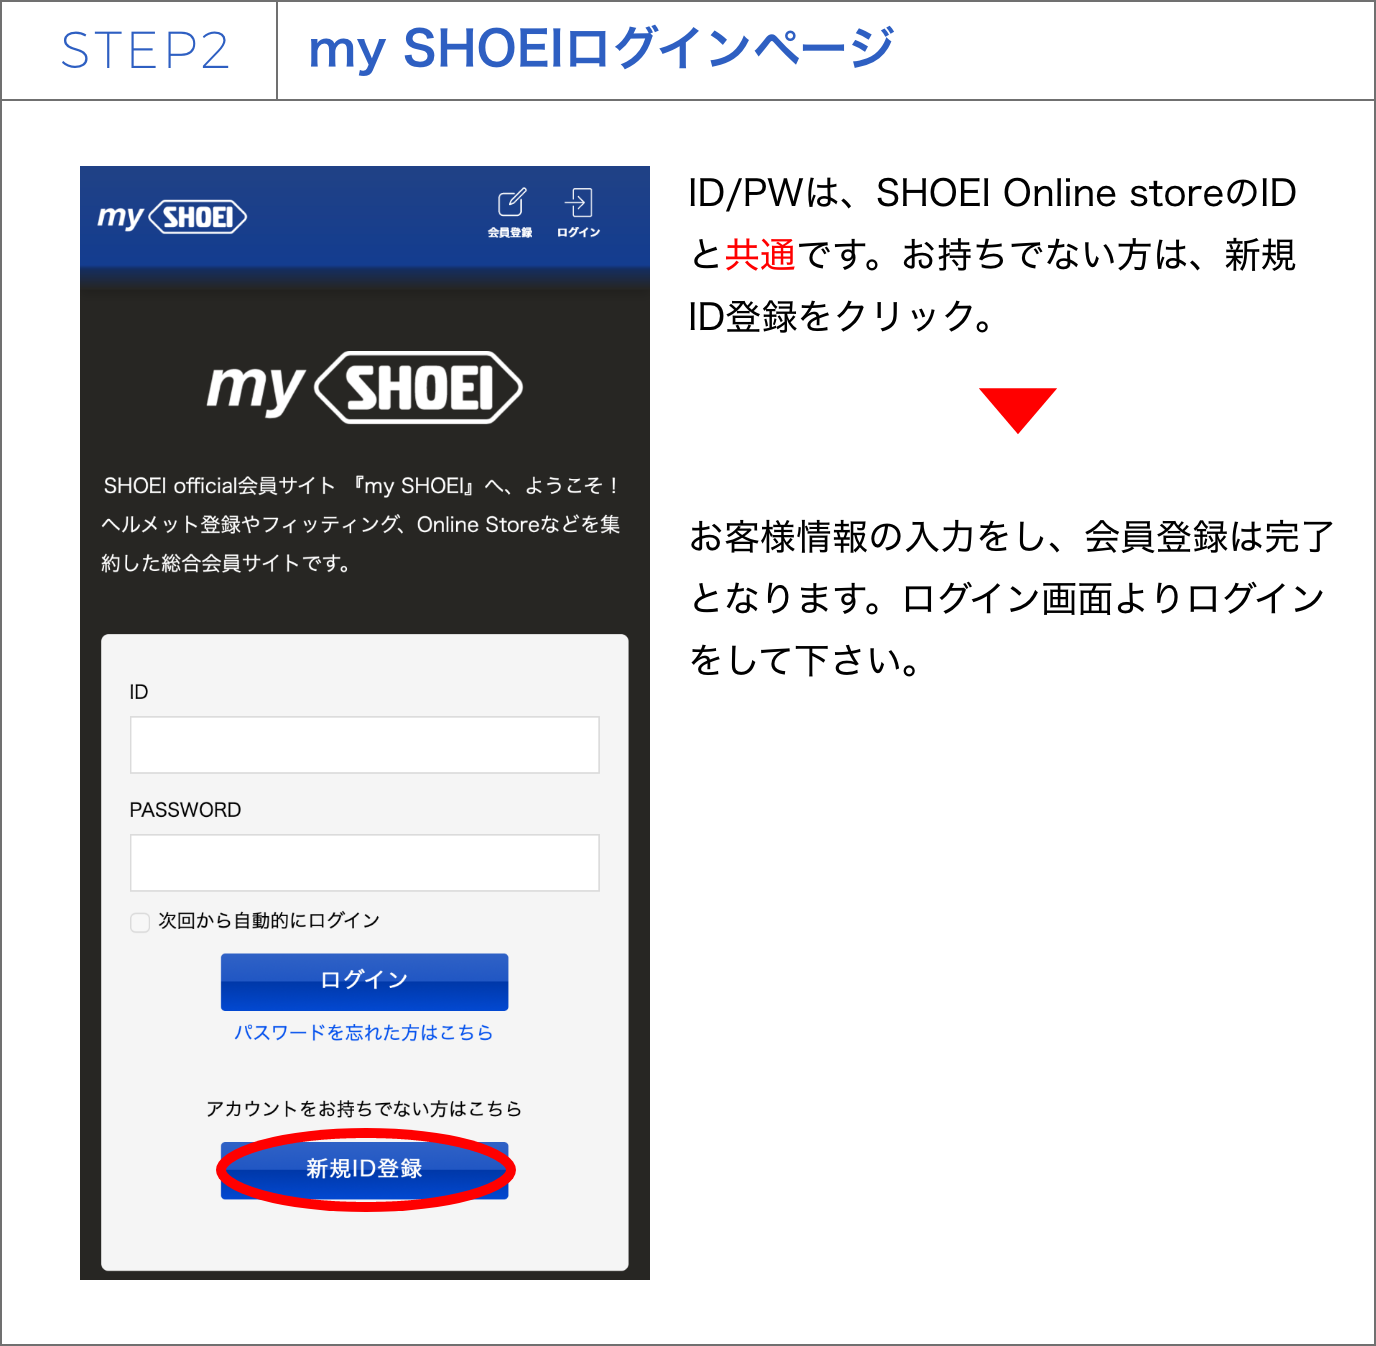 STEP2 My SHOEIログインページ